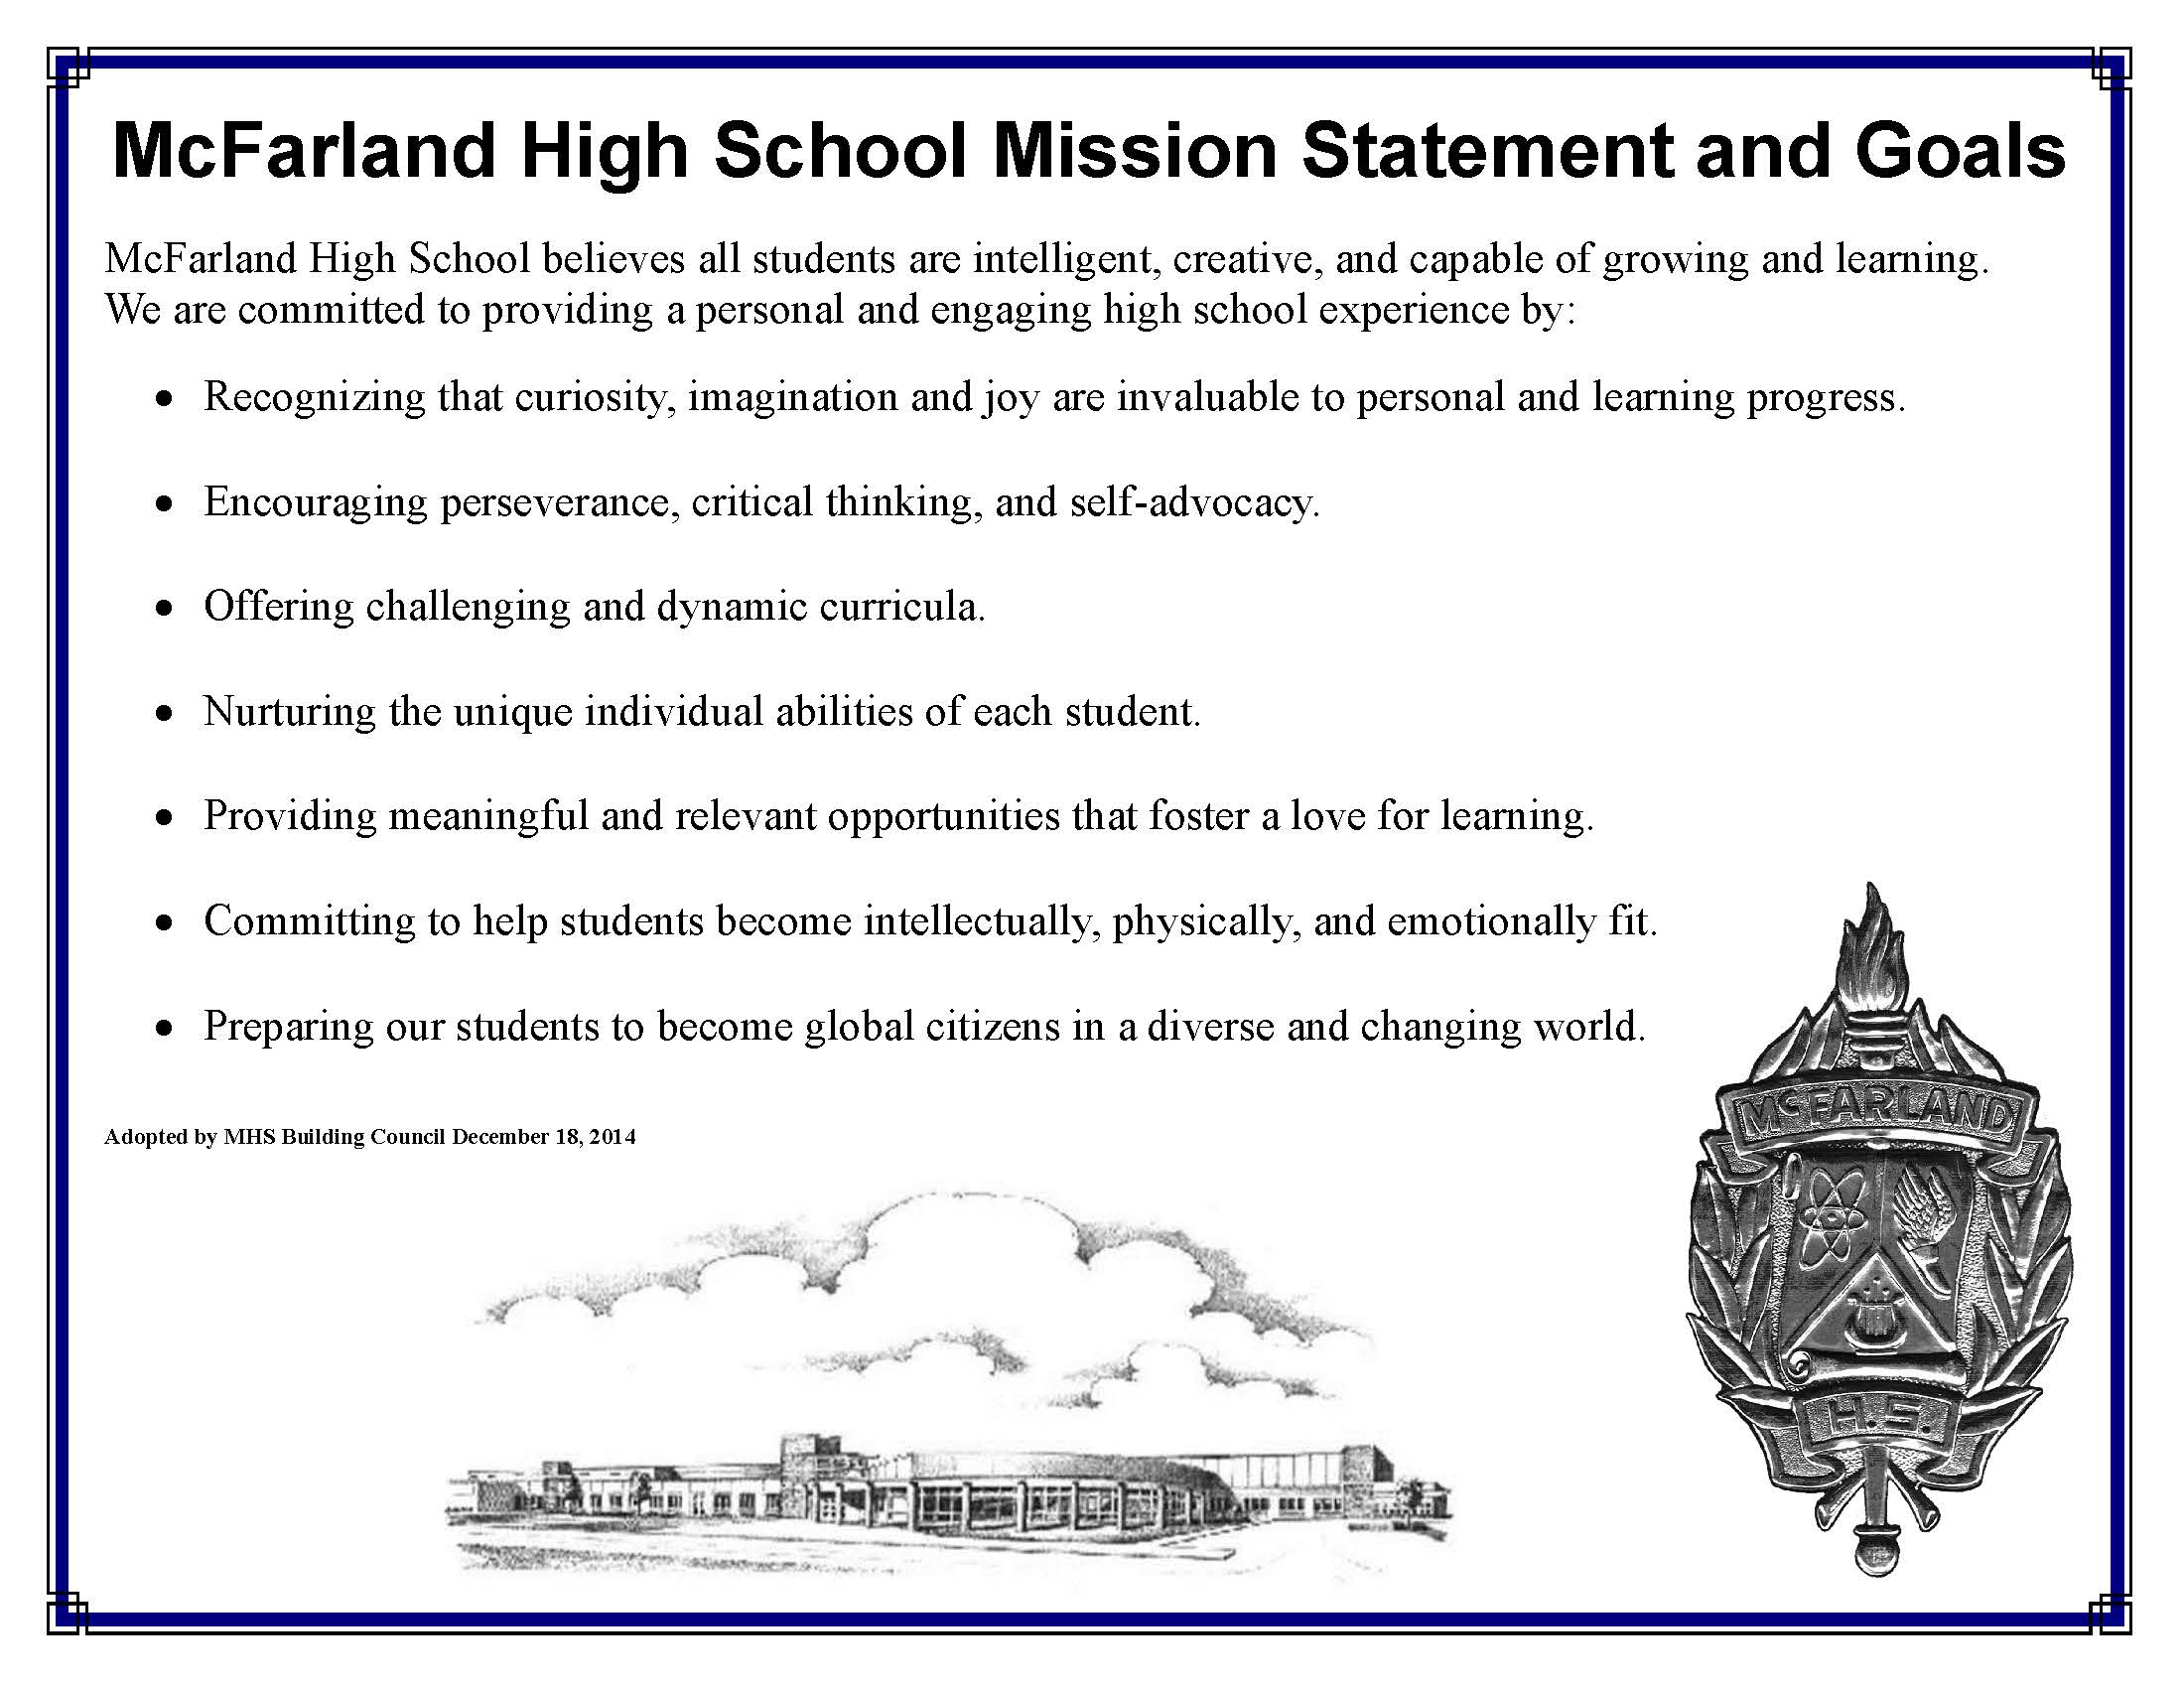 MHS Mission Statement